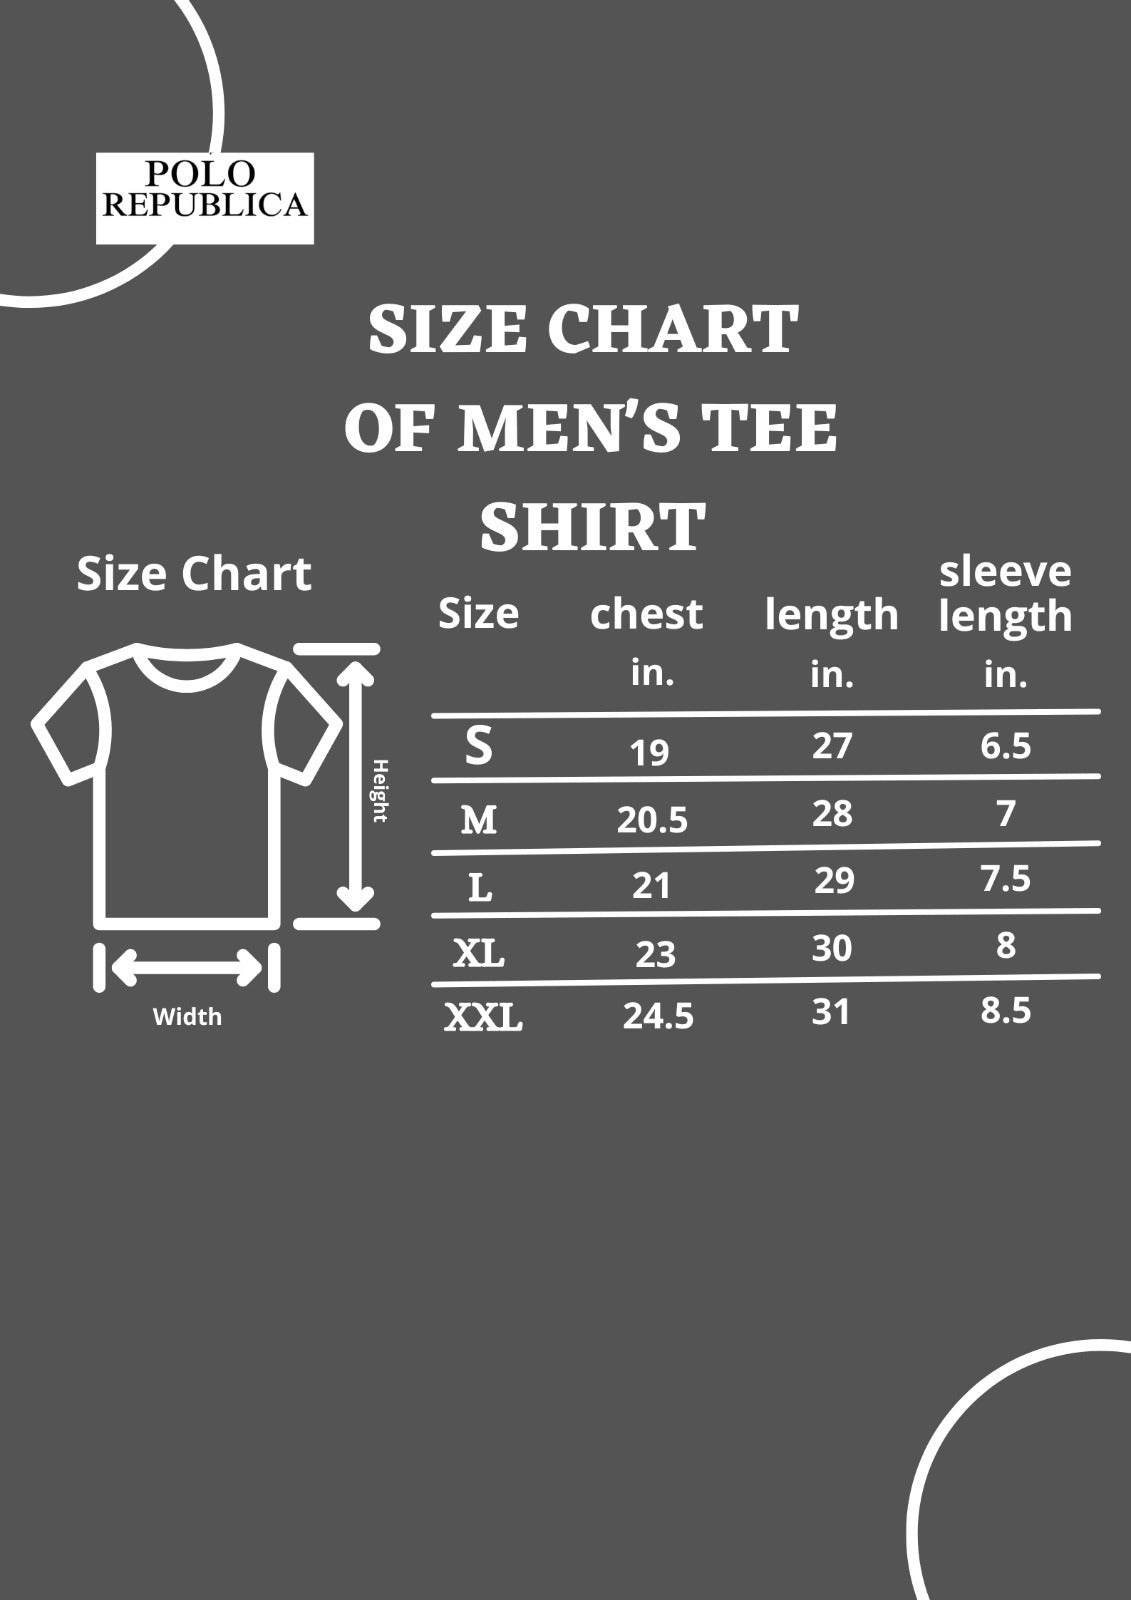 Sample Men's Custom Printed/Embroidered Short Sleeve Tee Shirt